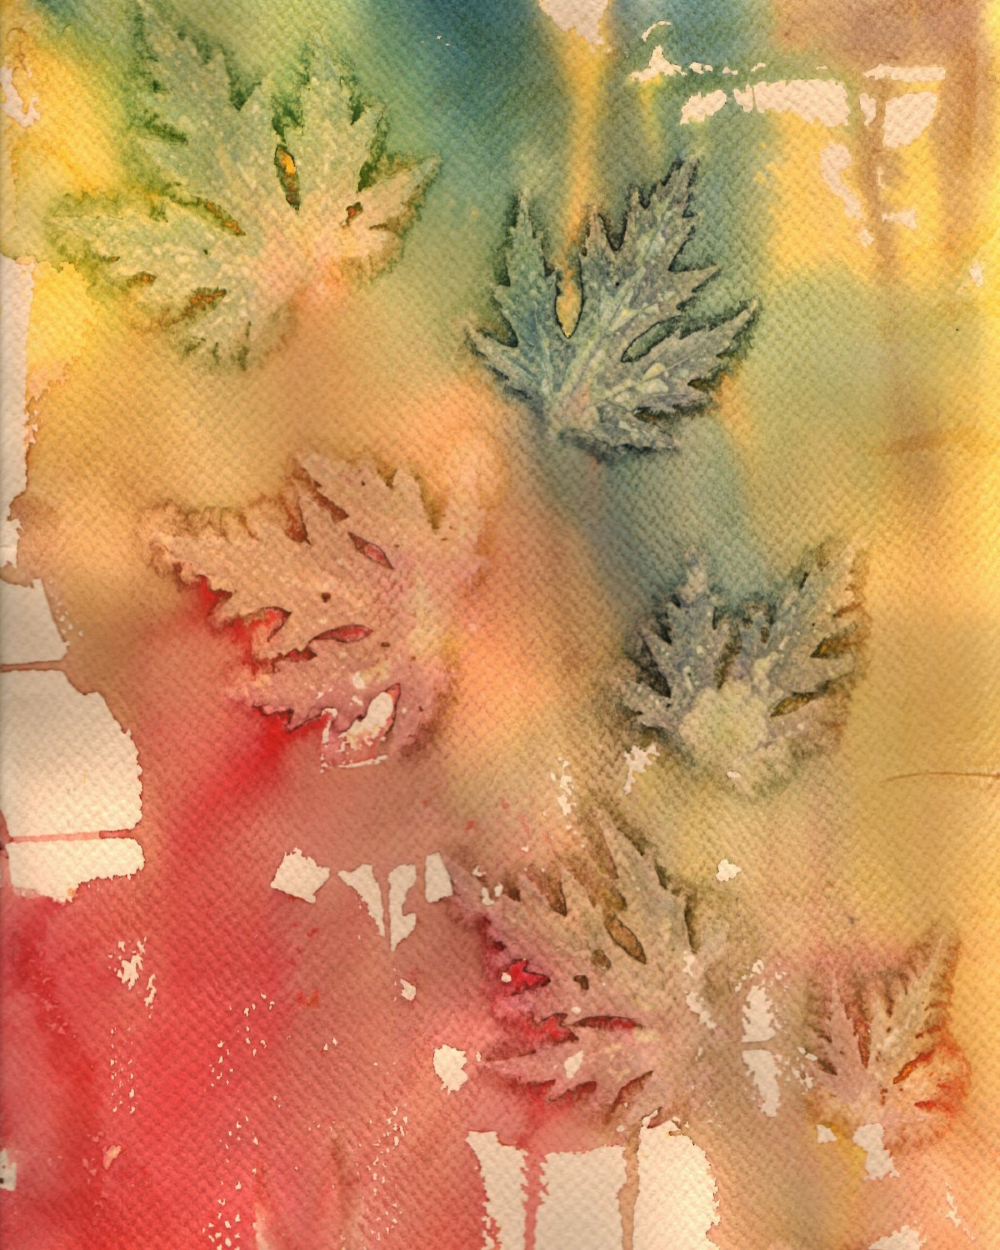 Watercolour: 'Leaf impression 1' (1995)